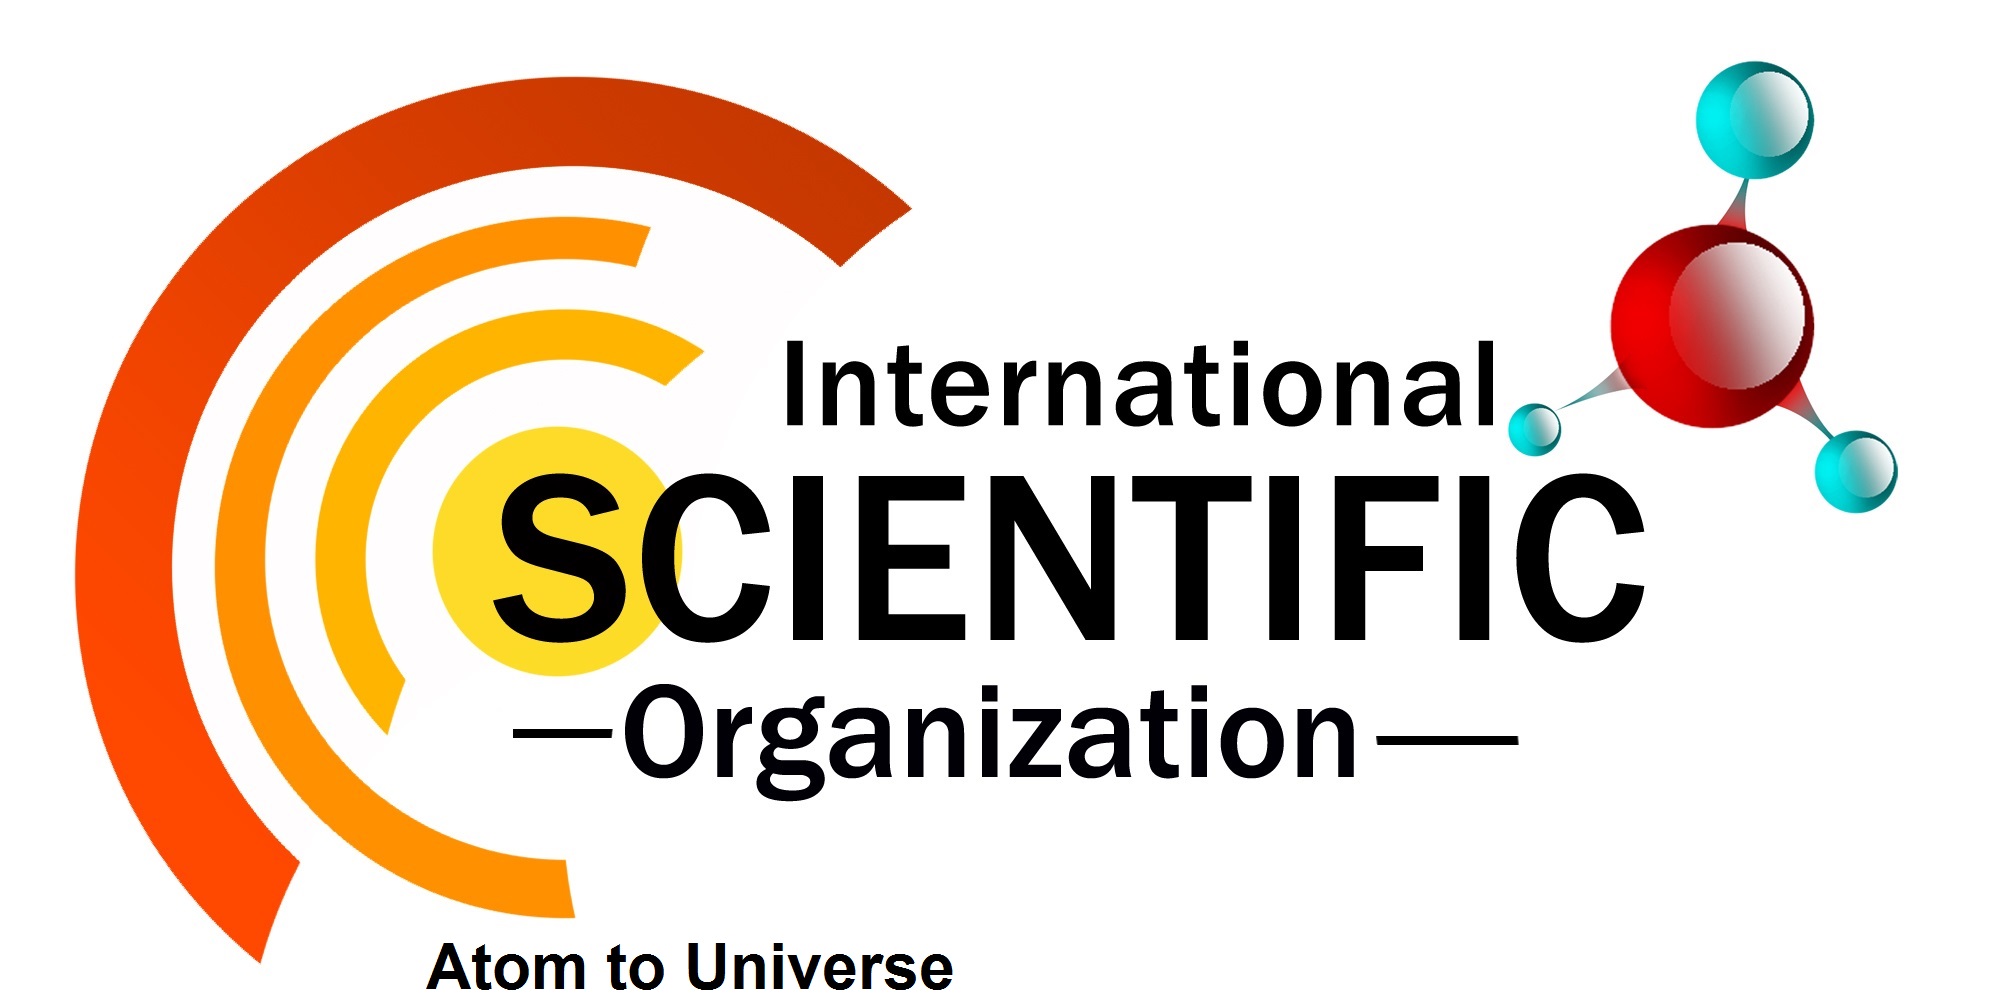 International Scientific Organization